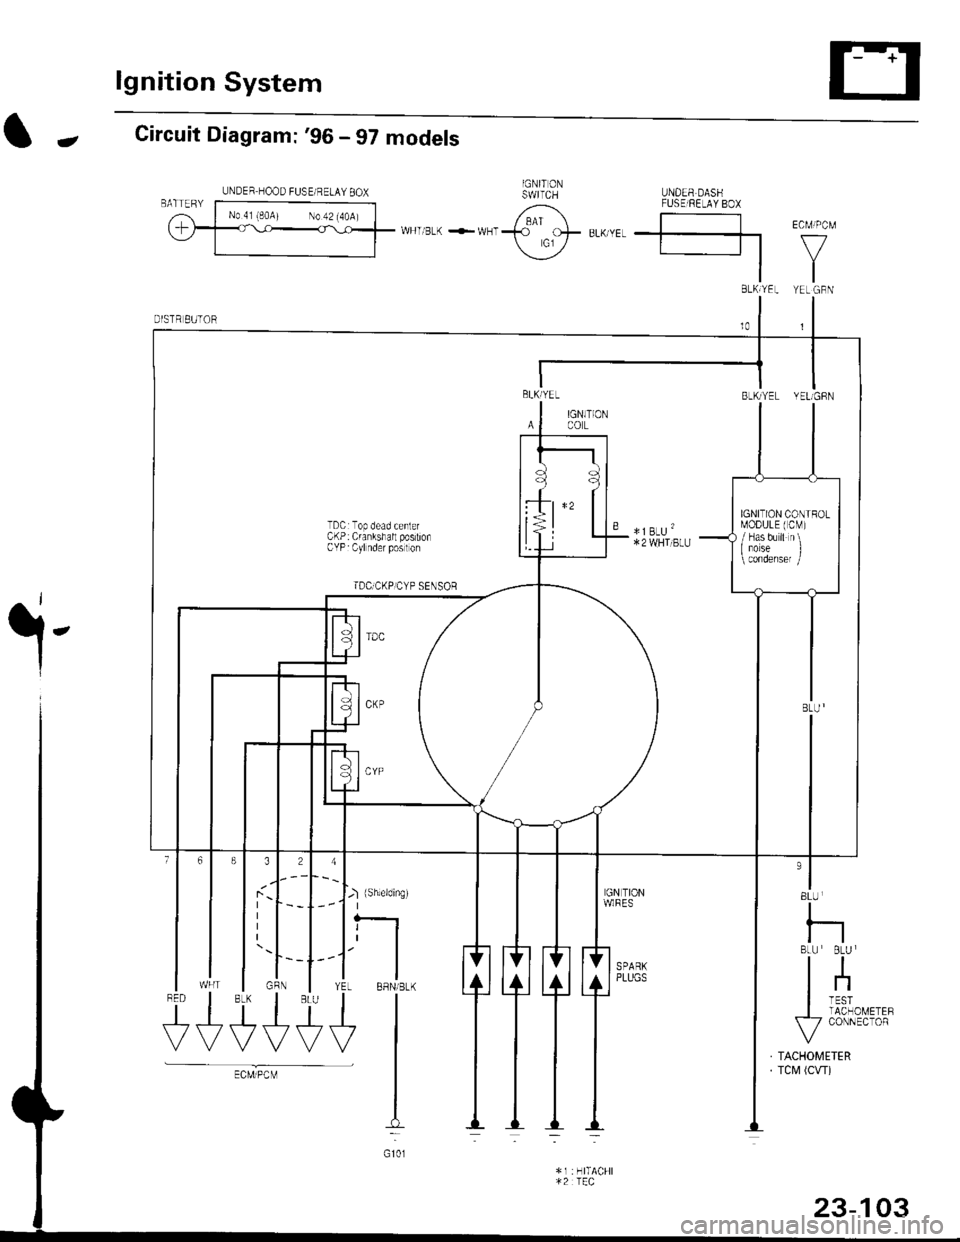 HONDA CIVIC 2000 6.G Workshop Manual lgnition System
-Circuit Diagram: 96 - 97 models
.i-
8LU
I
nBLU BLU I
tl
lnI TESTI TACHOMETEF\-7 CONNECTOR
TACHOMETERTCM (CW)
J-) {sh,eldinsrt I
tfYEL BBN/BLK
+l
I:
G101
$t+++
UNDER HOOD FUSE/ RELAY